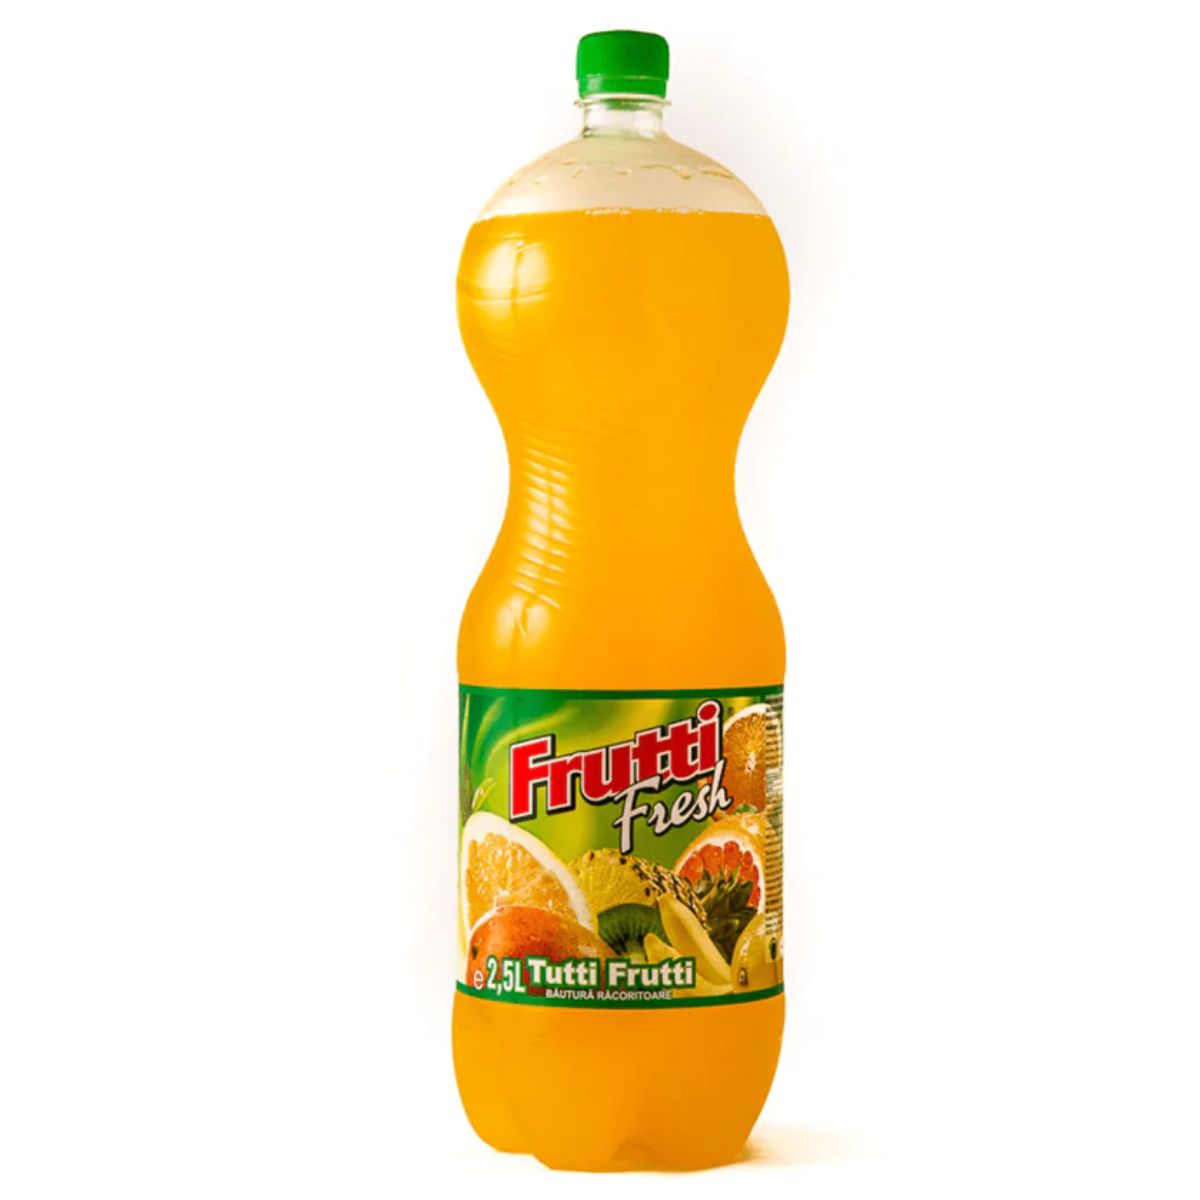 A bottle of Frutti Fresh - Tutti Frutti Flavour Drink - 2L on a white background.